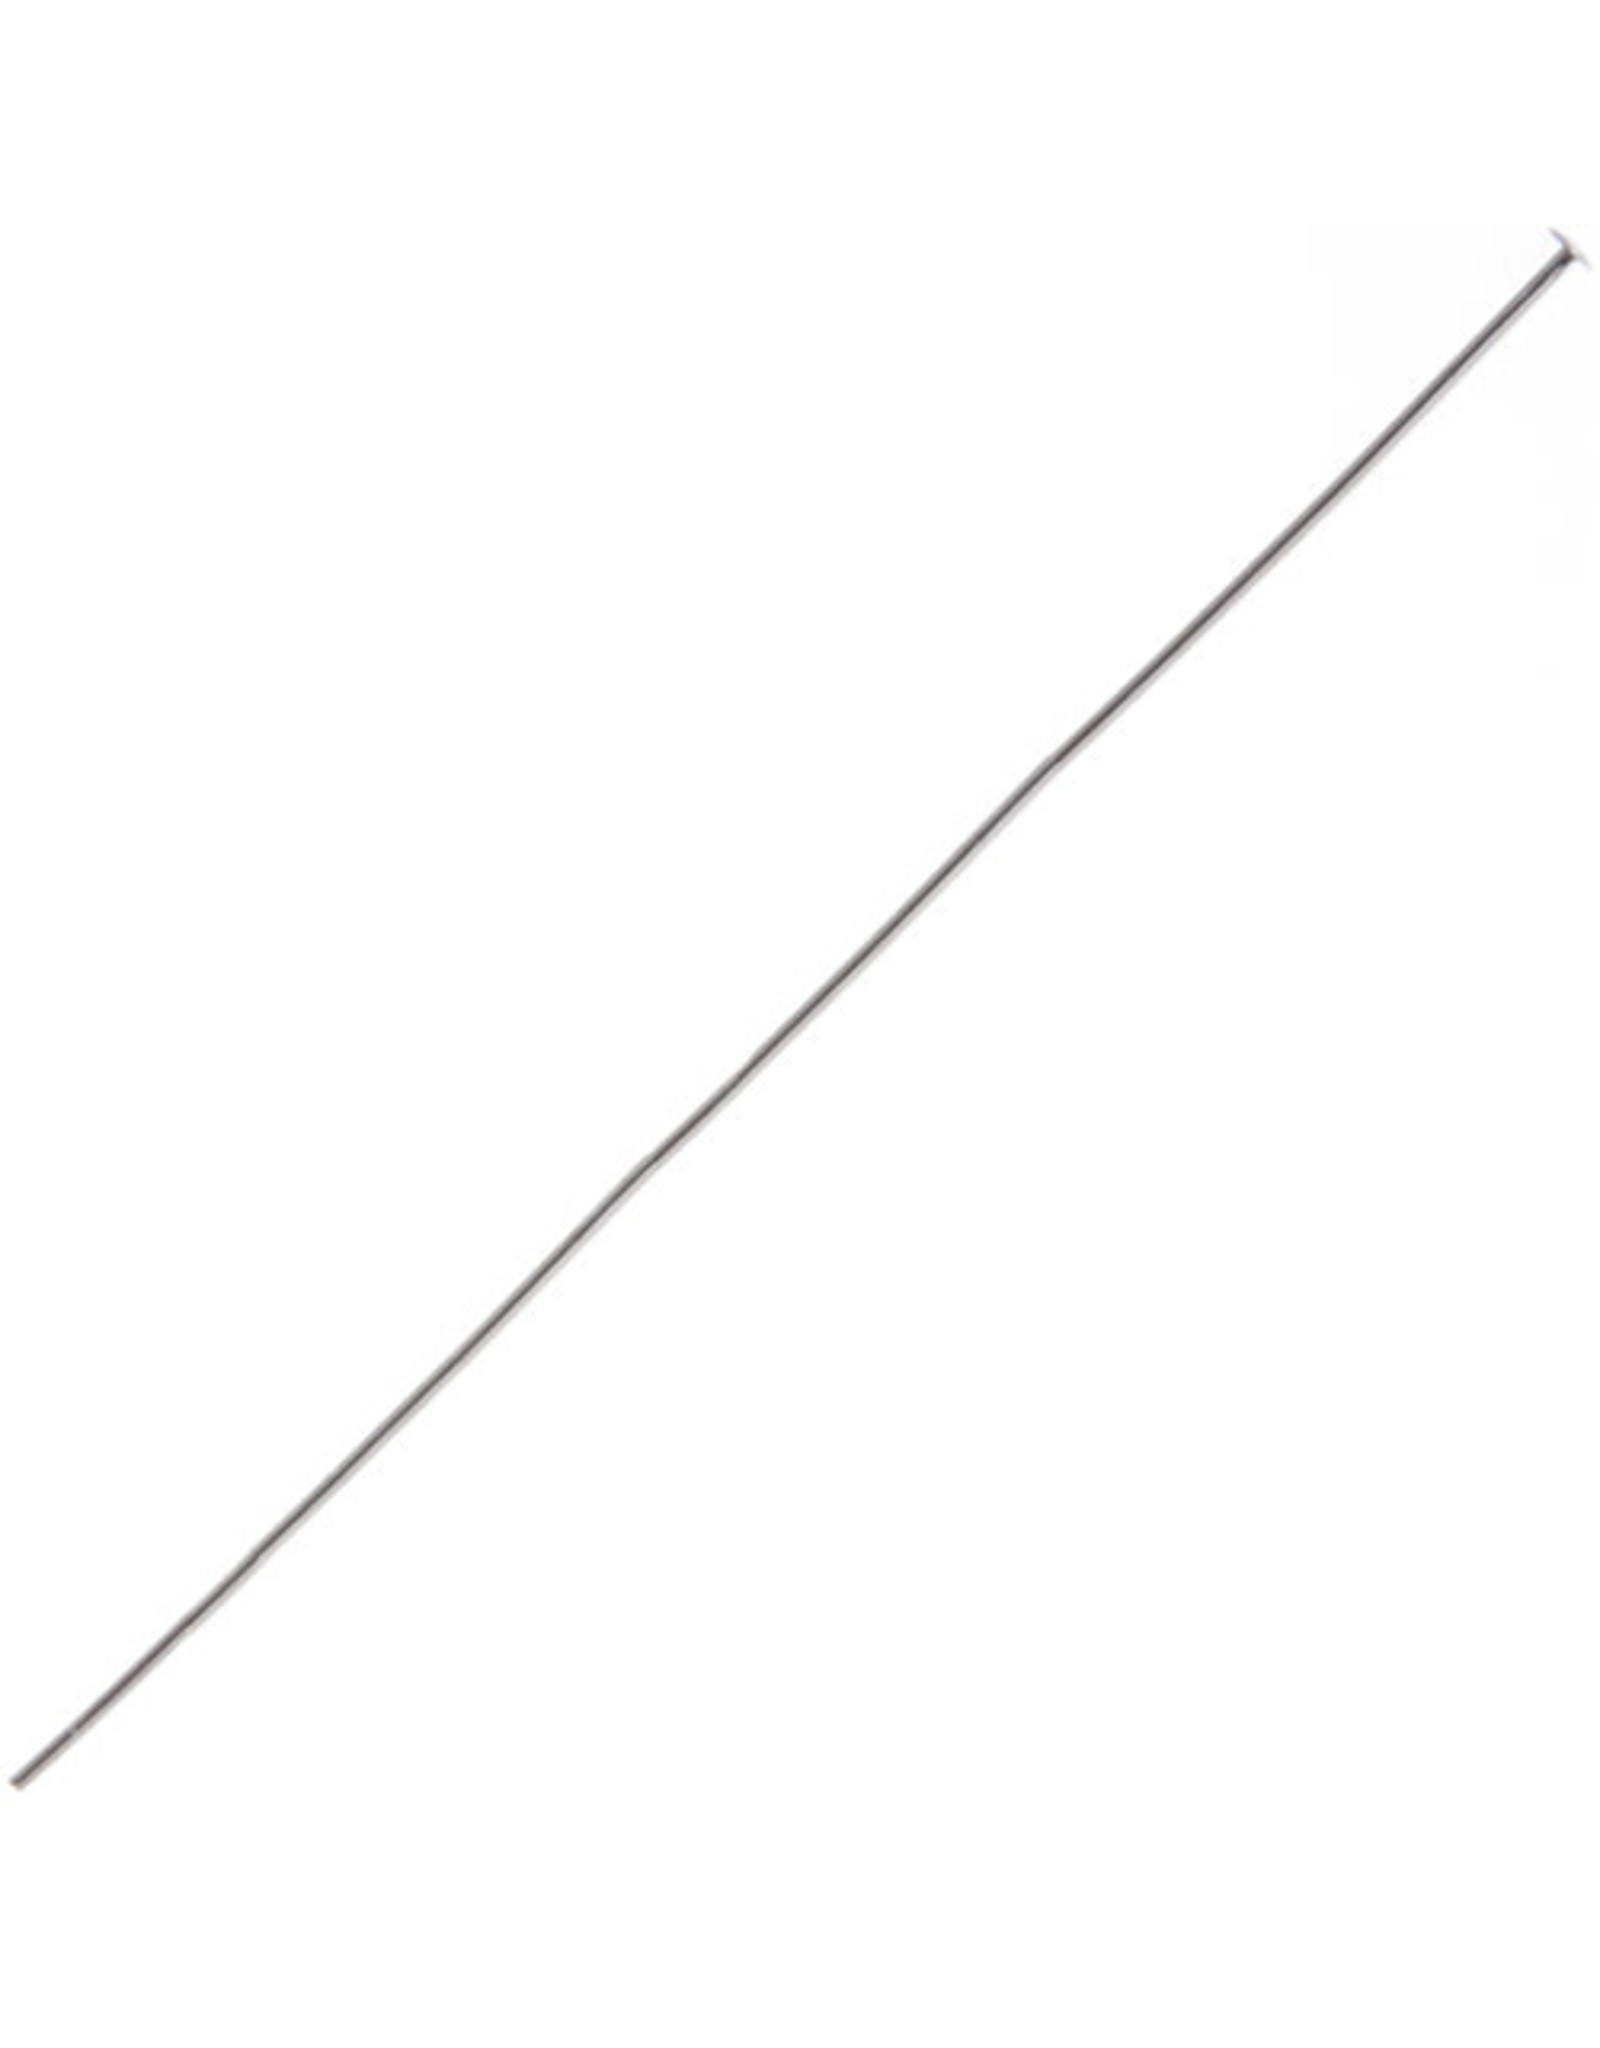 Headpins 3” 20g Rhodium   x50   NF